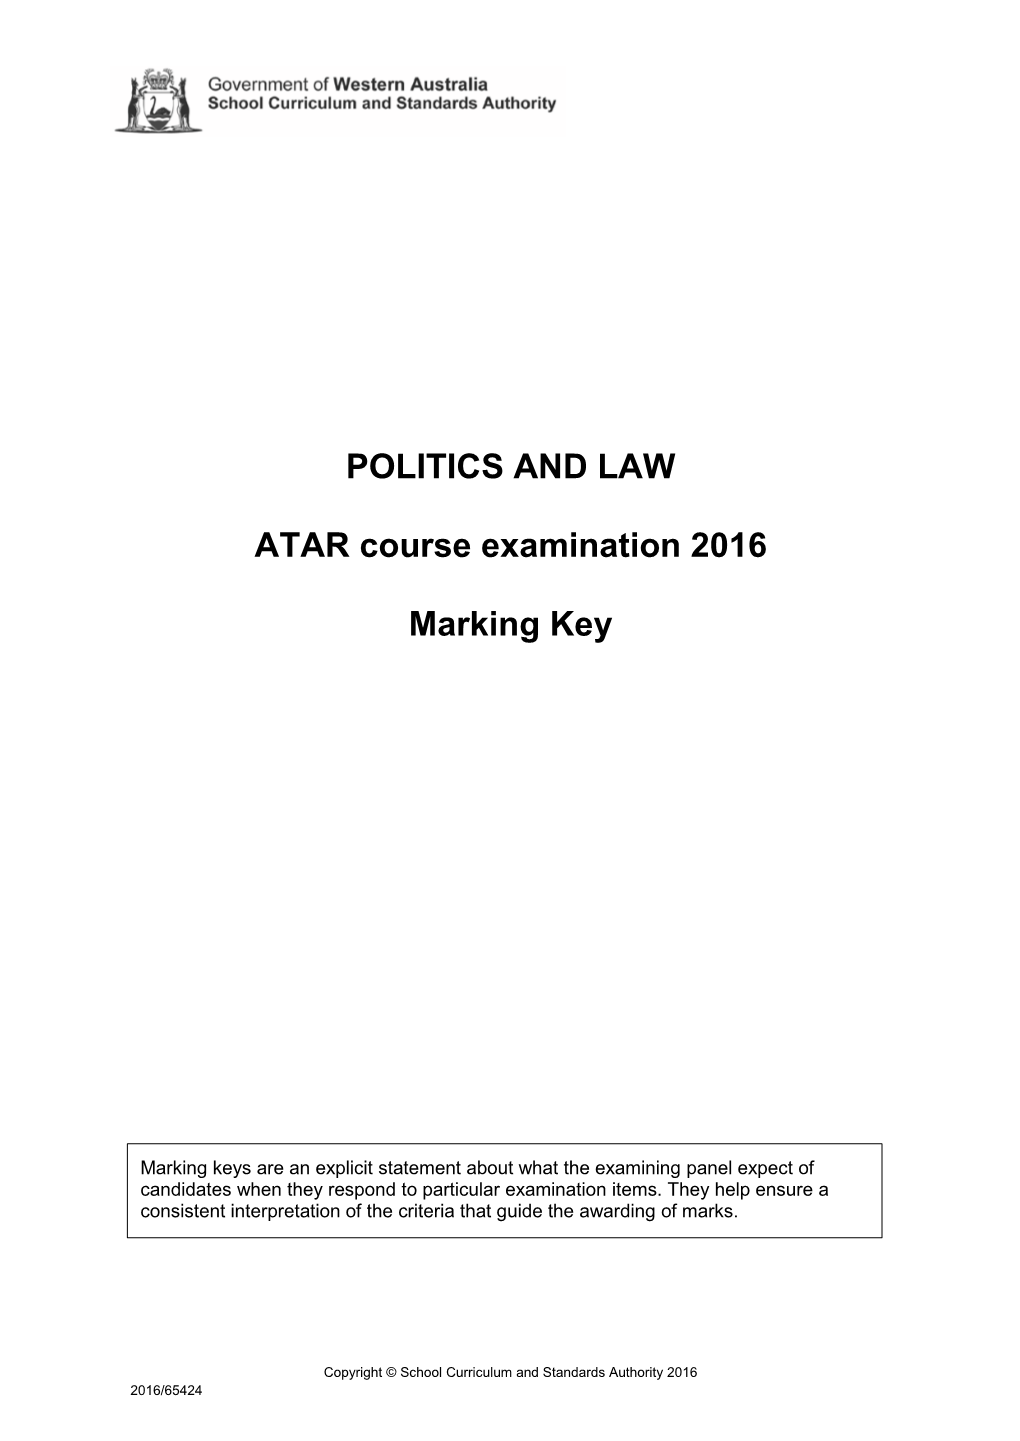 POLITICS and LAW ATAR Course Examination 2016 Marking